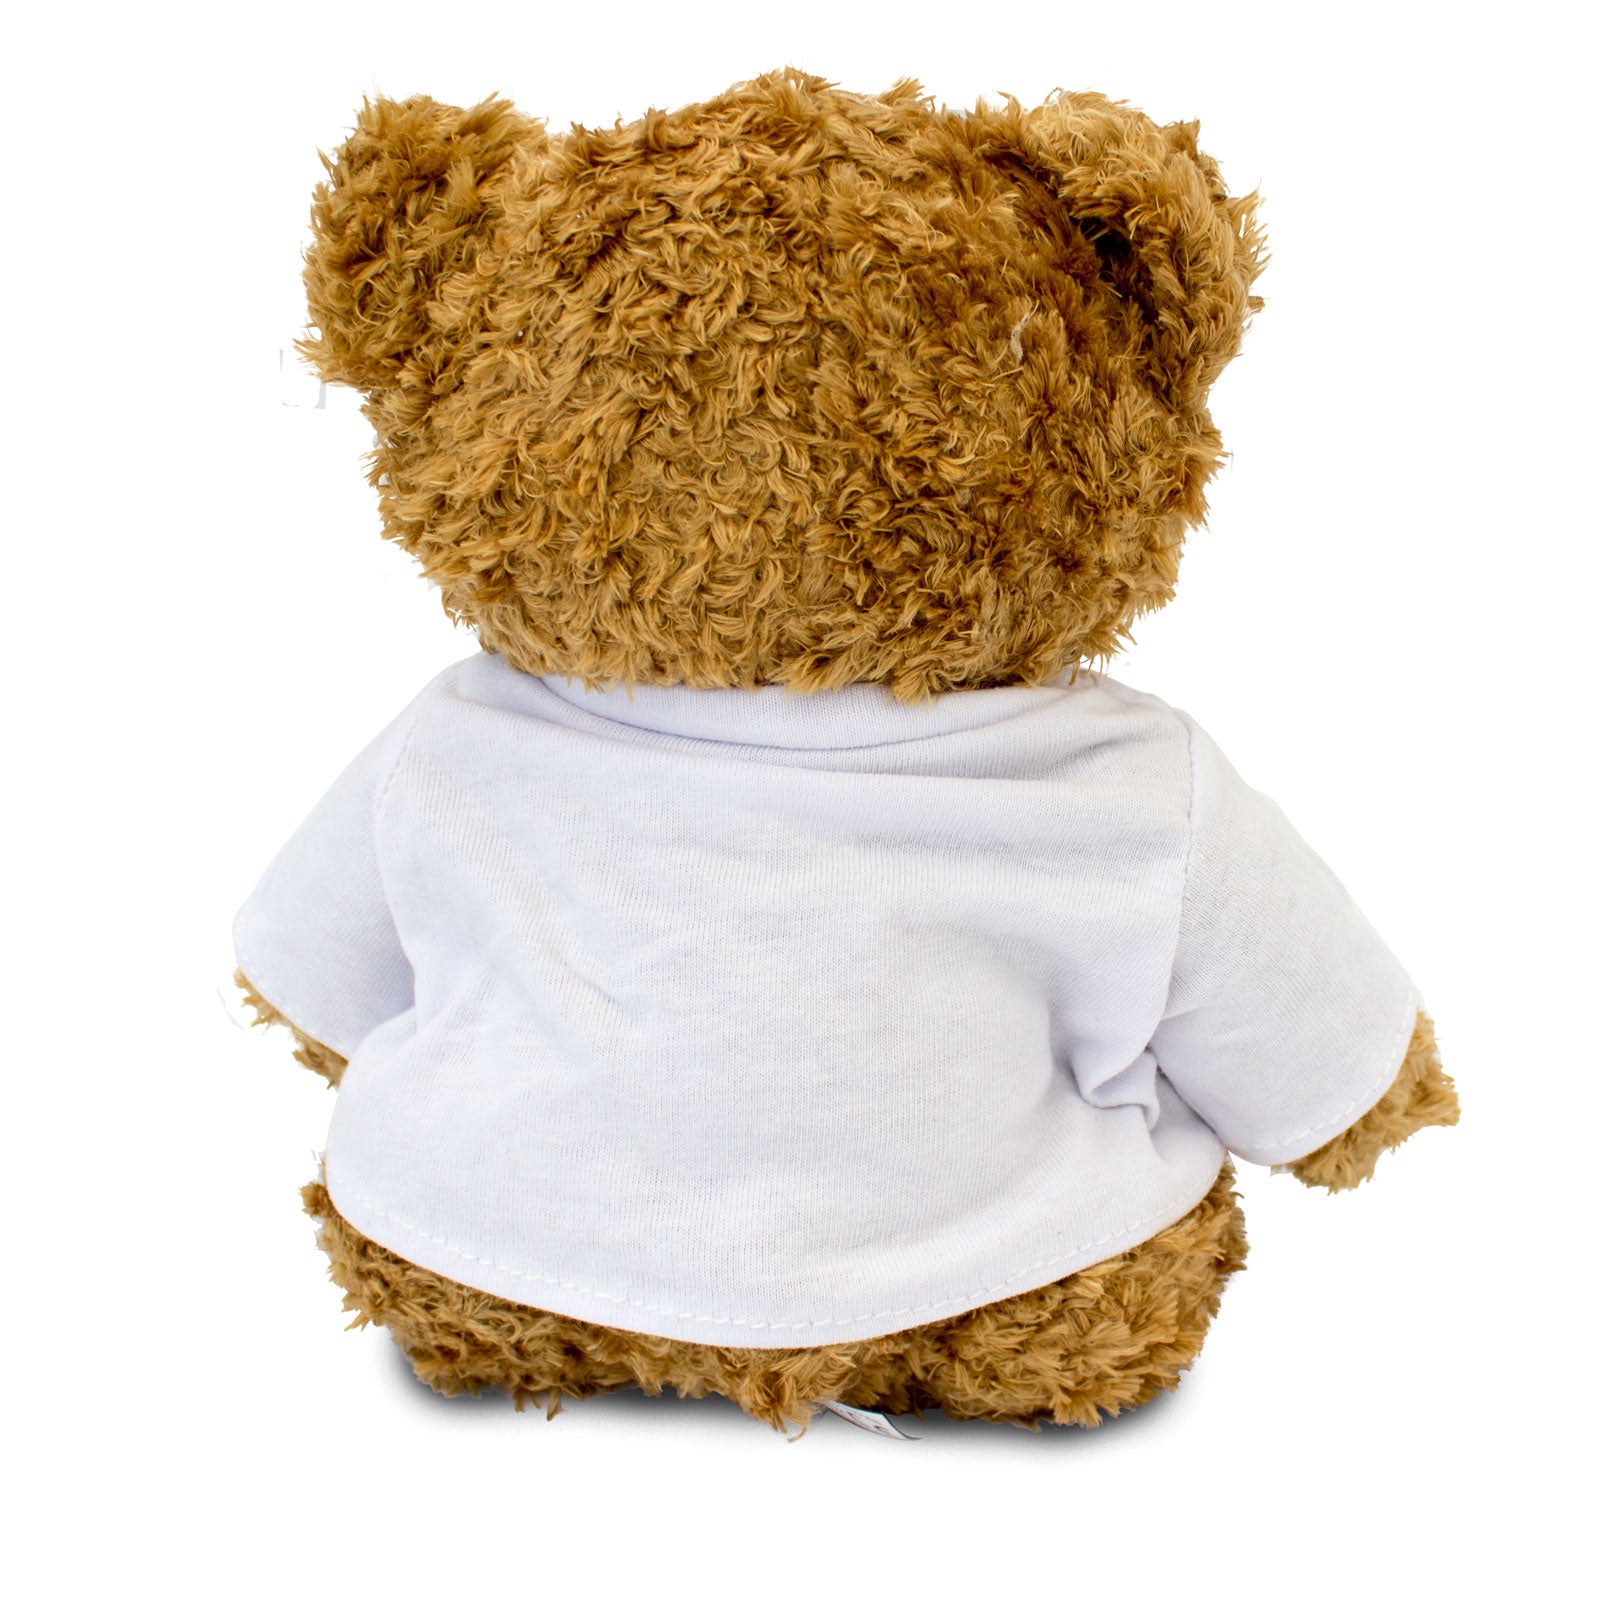 Get Well Soon Darius - Teddy Bear